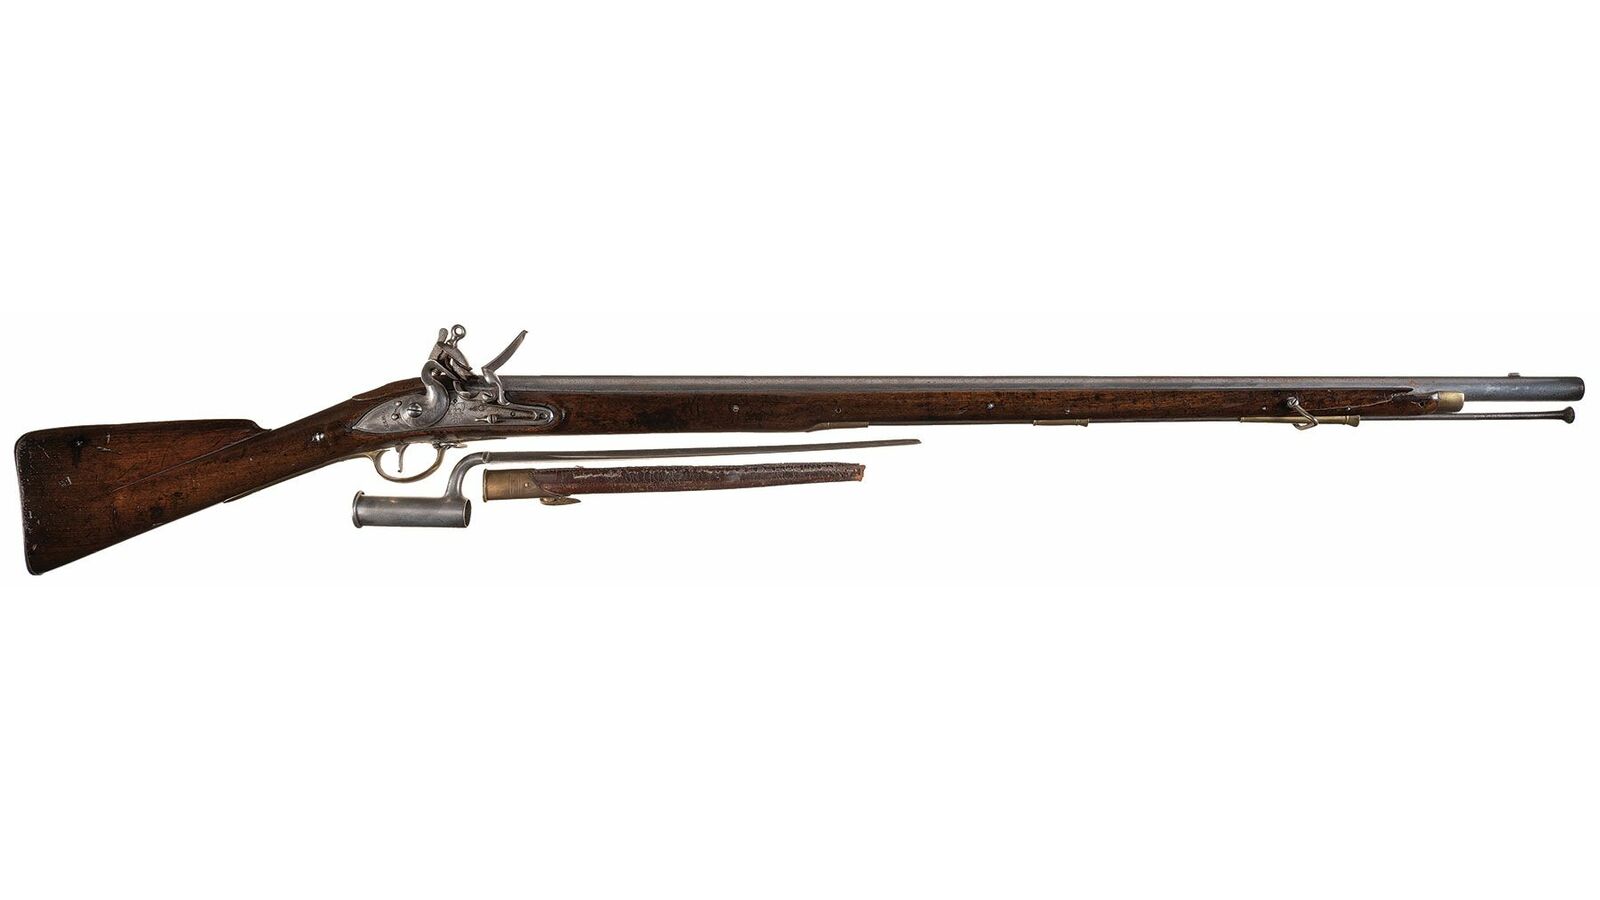 British India Pattern Brown Bess Flintlock Musket with Bayonet.